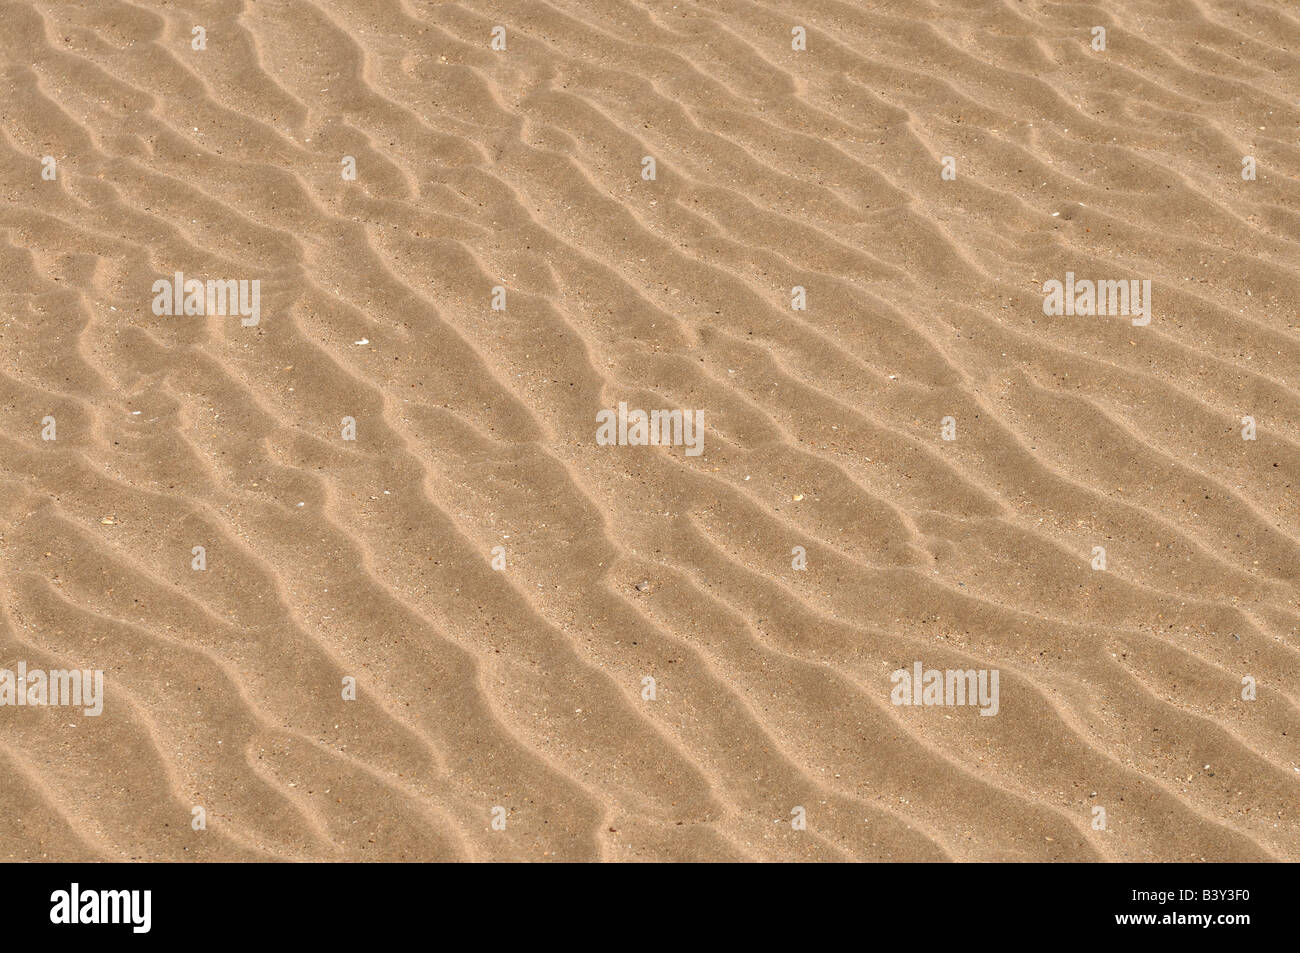 Sandy beach pattern Stock Photo